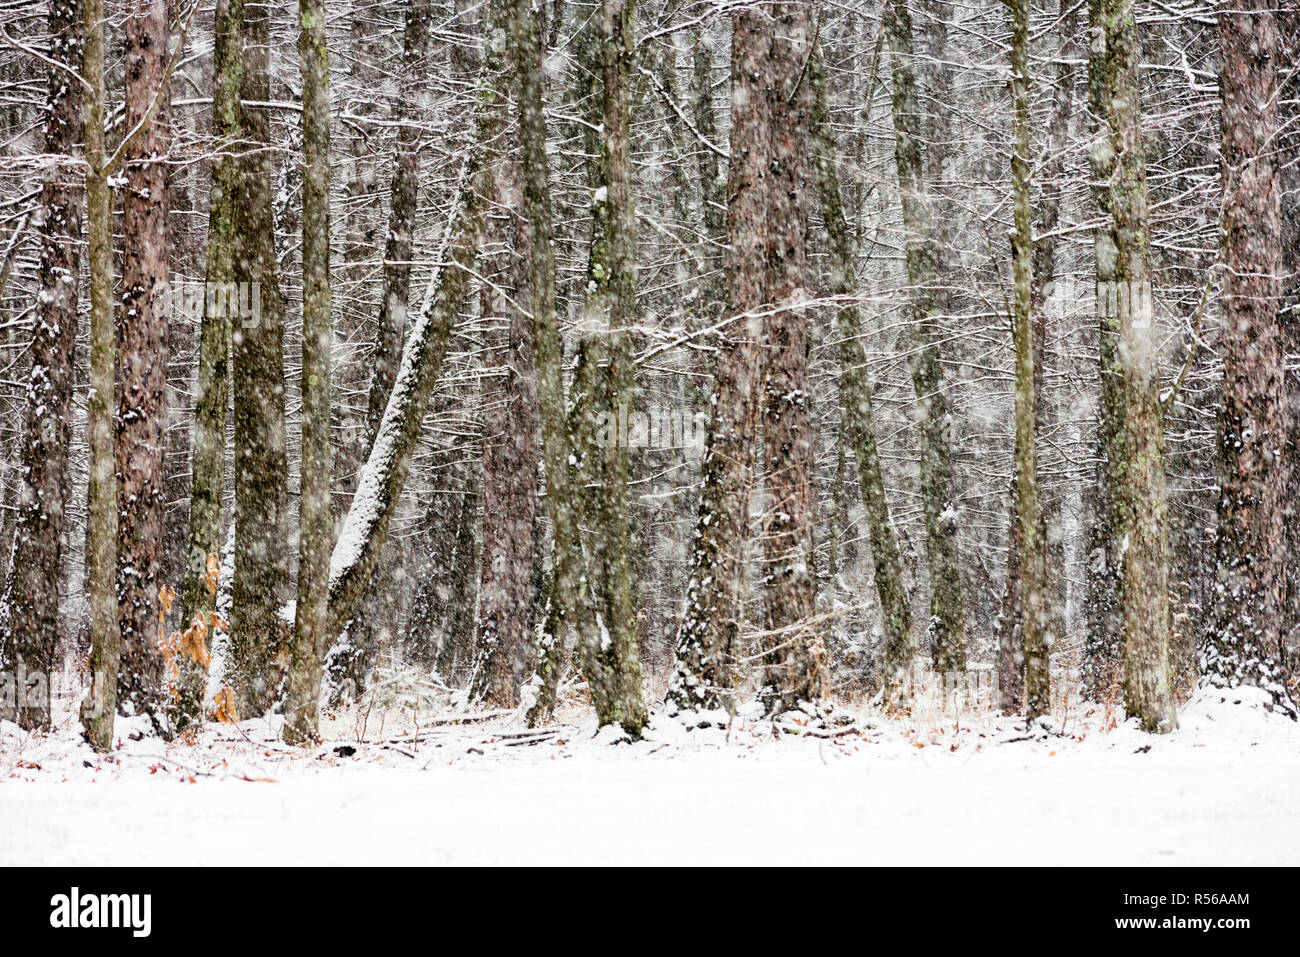 Winter Scene Woods with Snow Covered Tamarack Trees Stock Photo